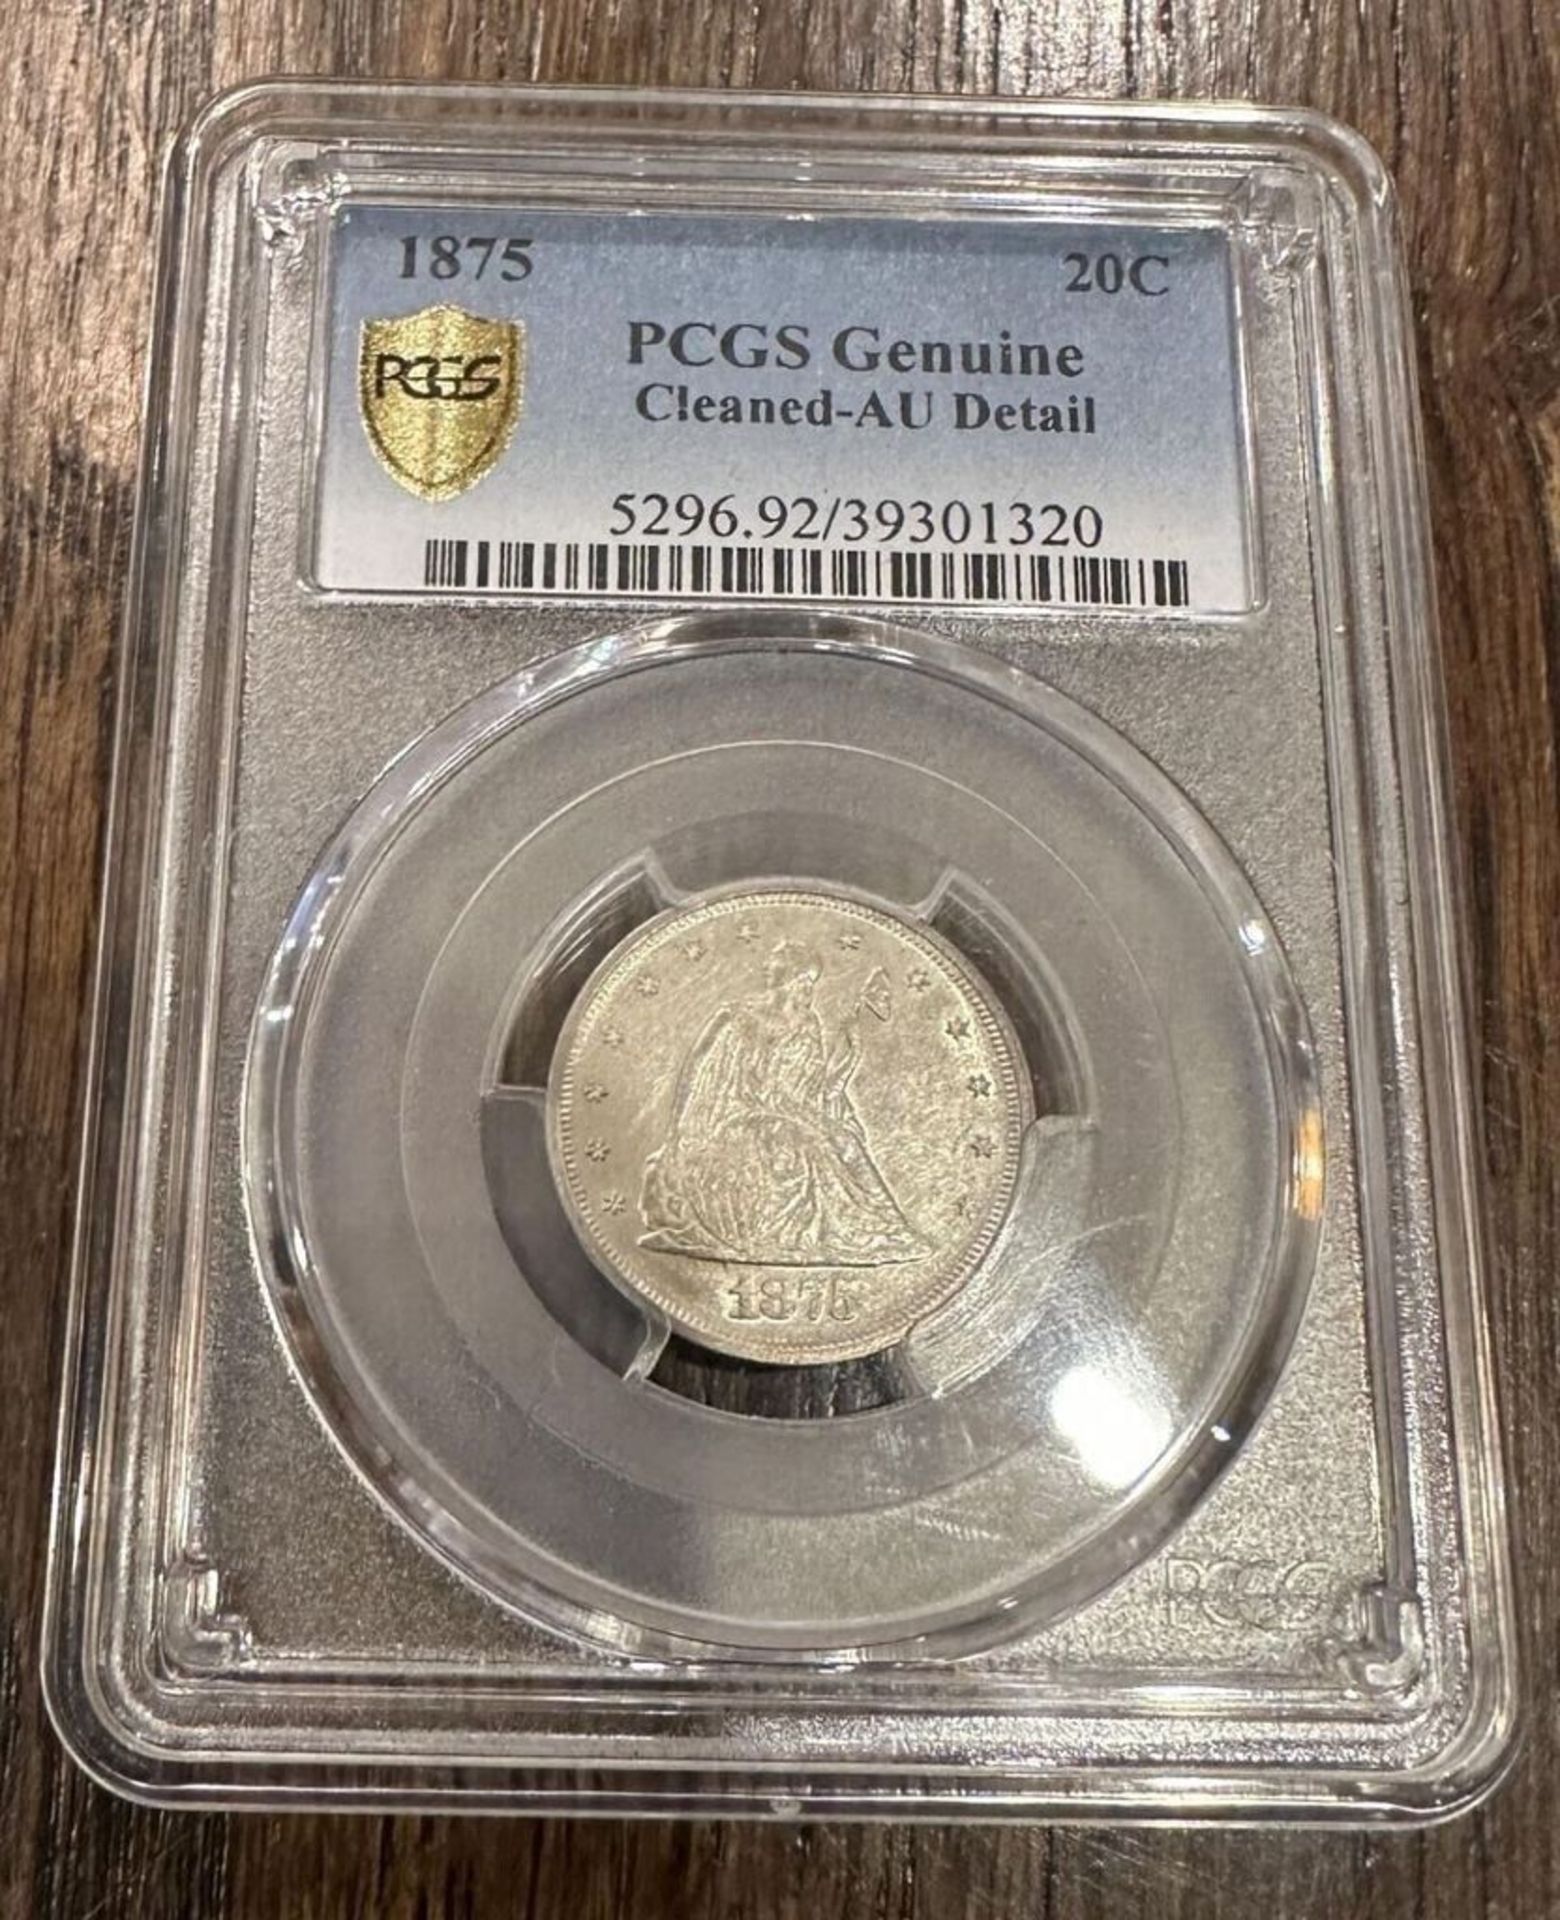 1875 PCGS GENUINE CLEANED-AU DETAIL 20C PCGS COIN